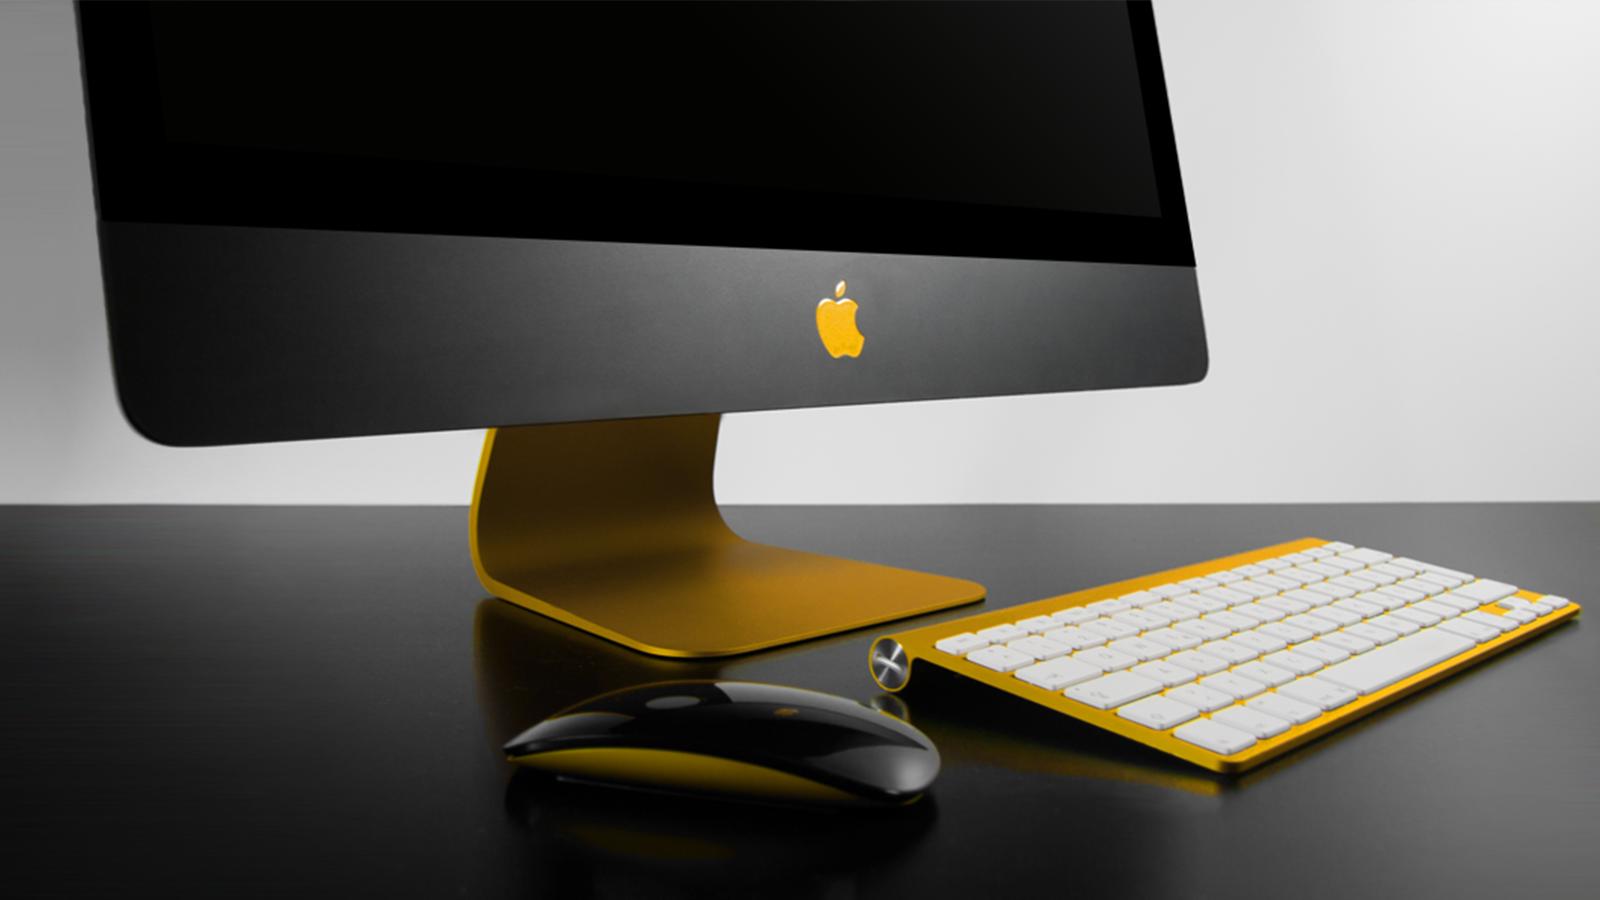 iMac Gold